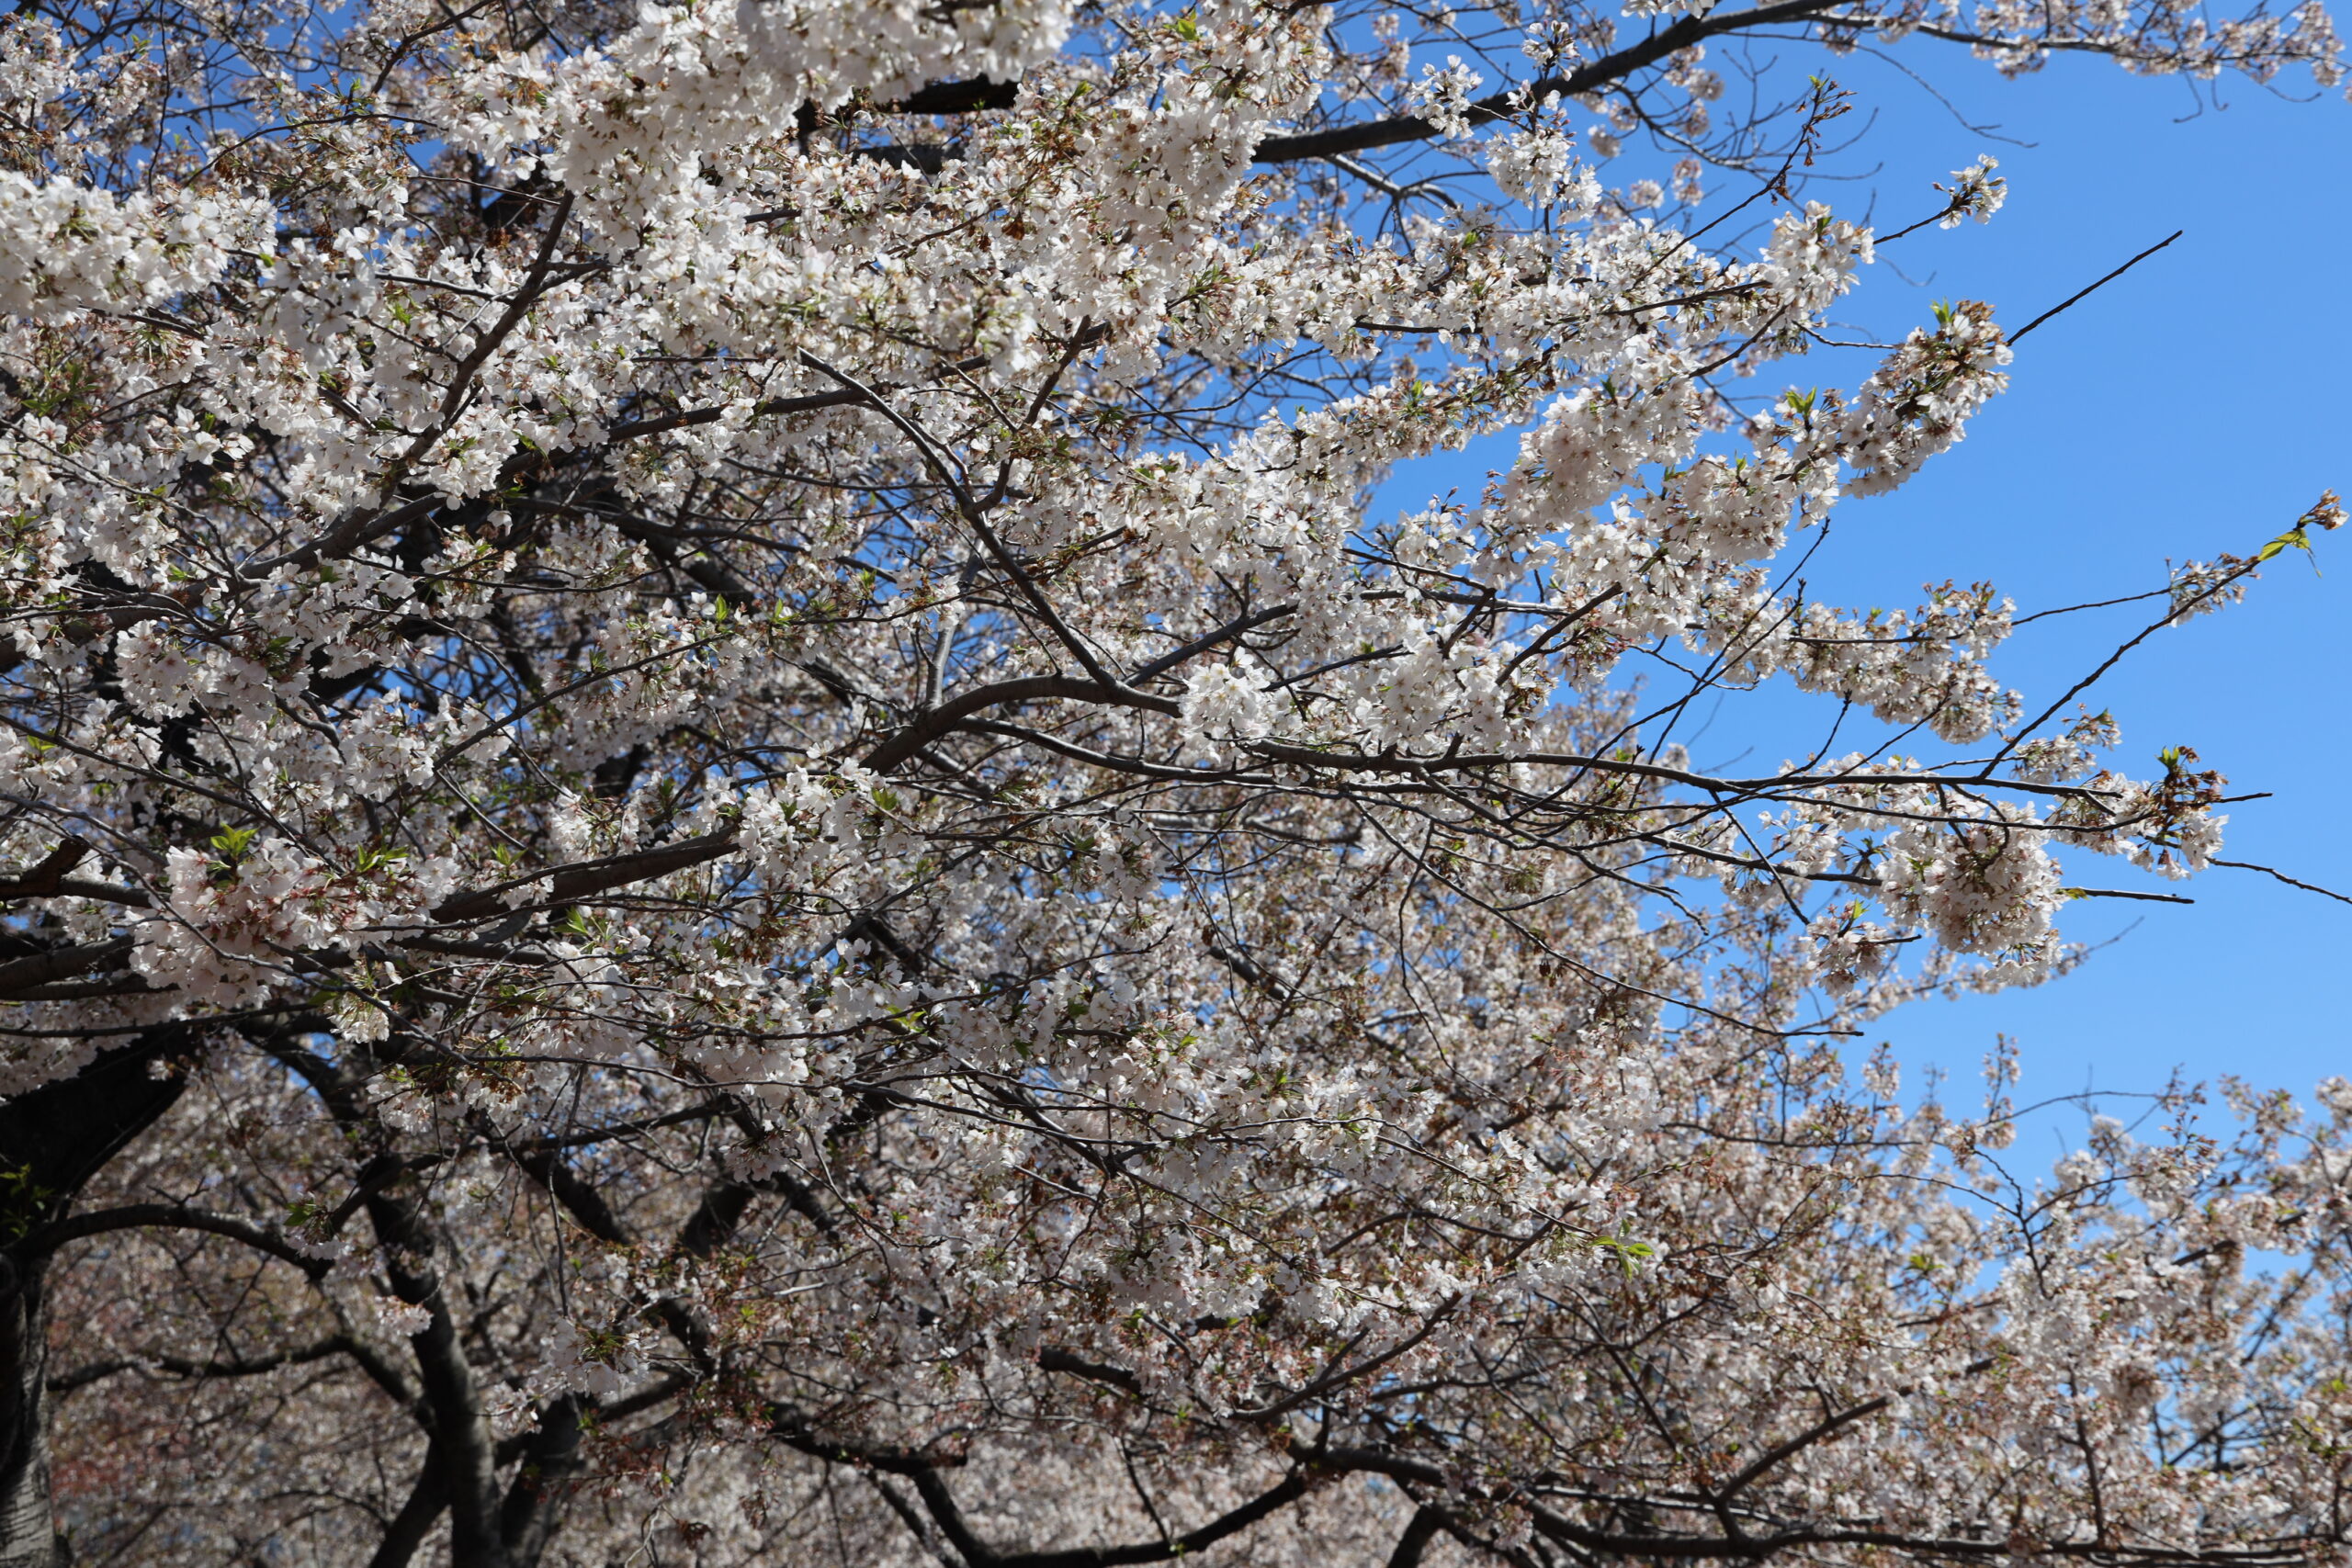 Cherry blossoms in Washington D.C.